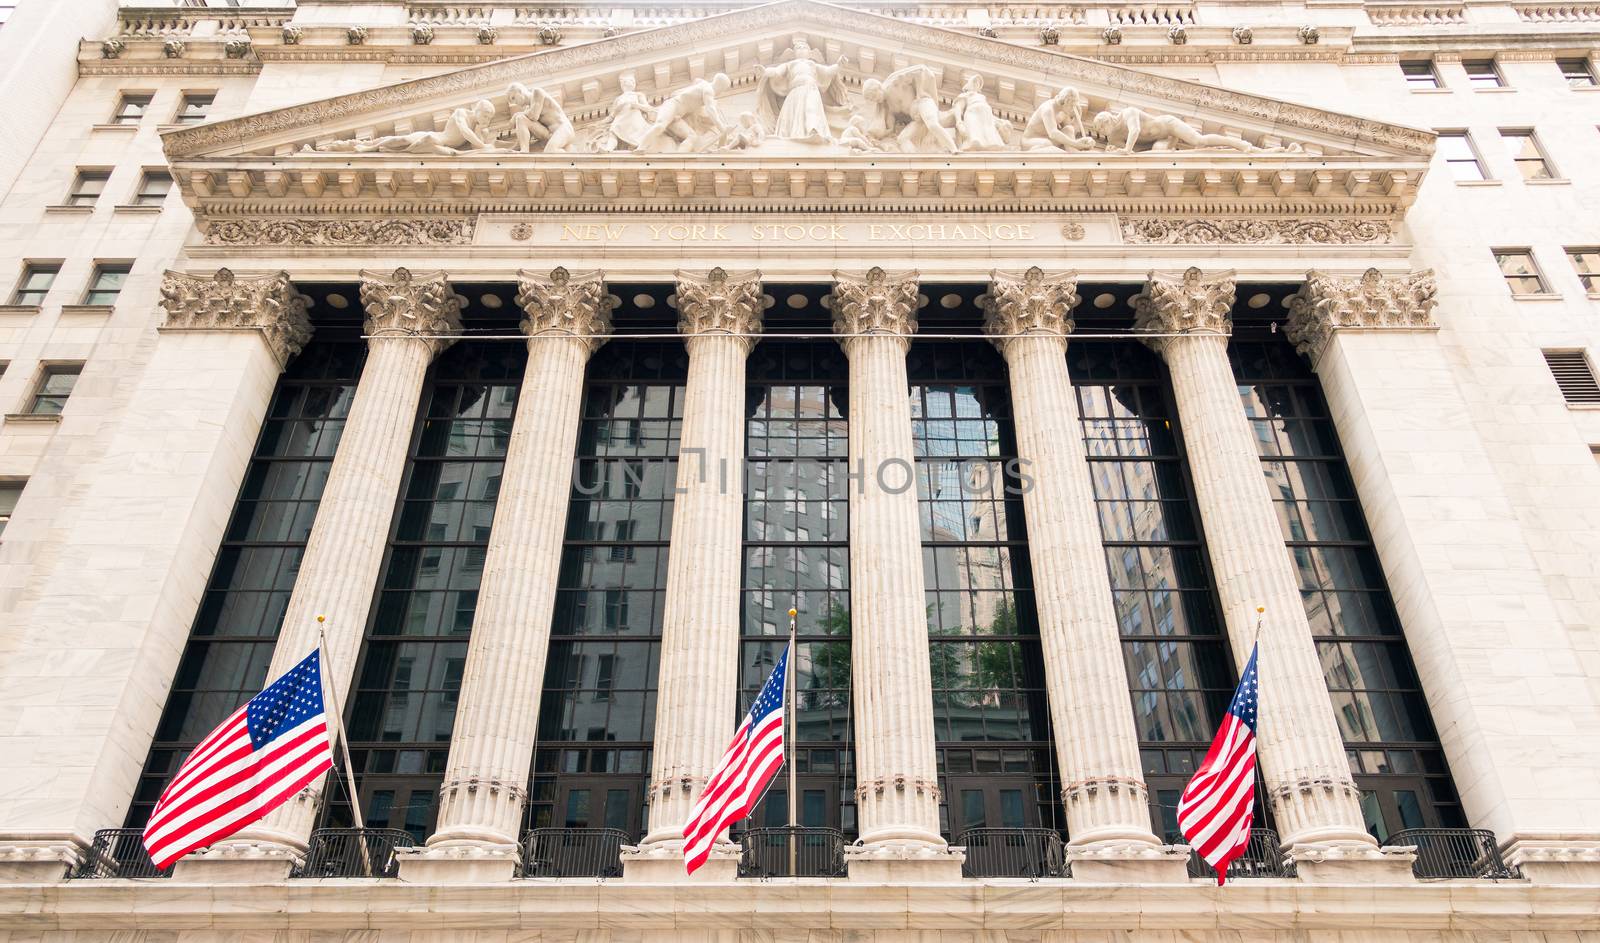 New York Stock Exchange on Wall Street by dutourdumonde